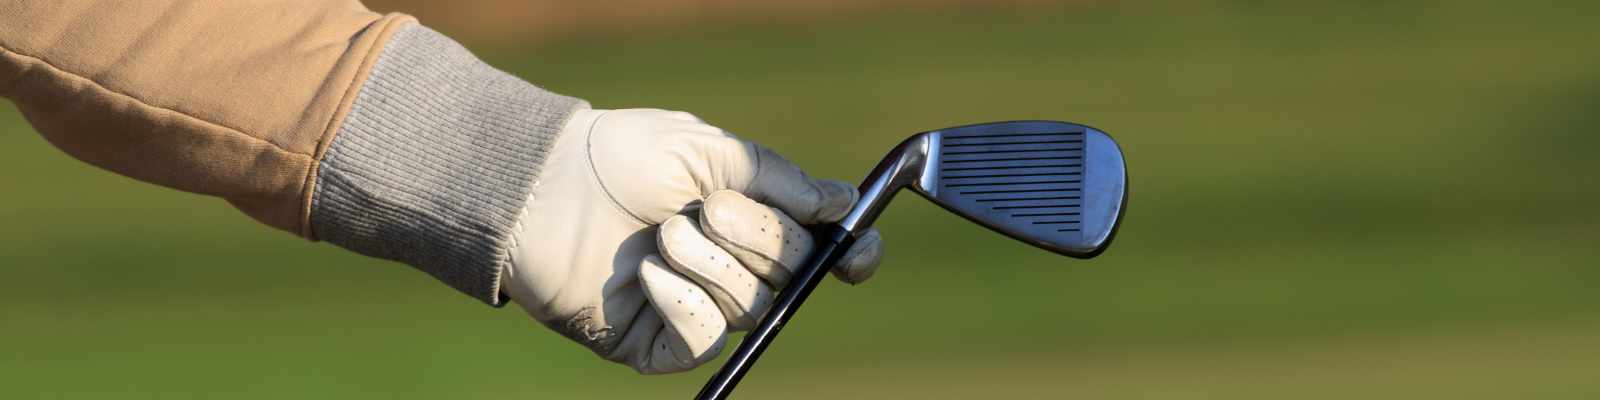 Golfschläger (photo by Stokkete / Shutterstock.com)